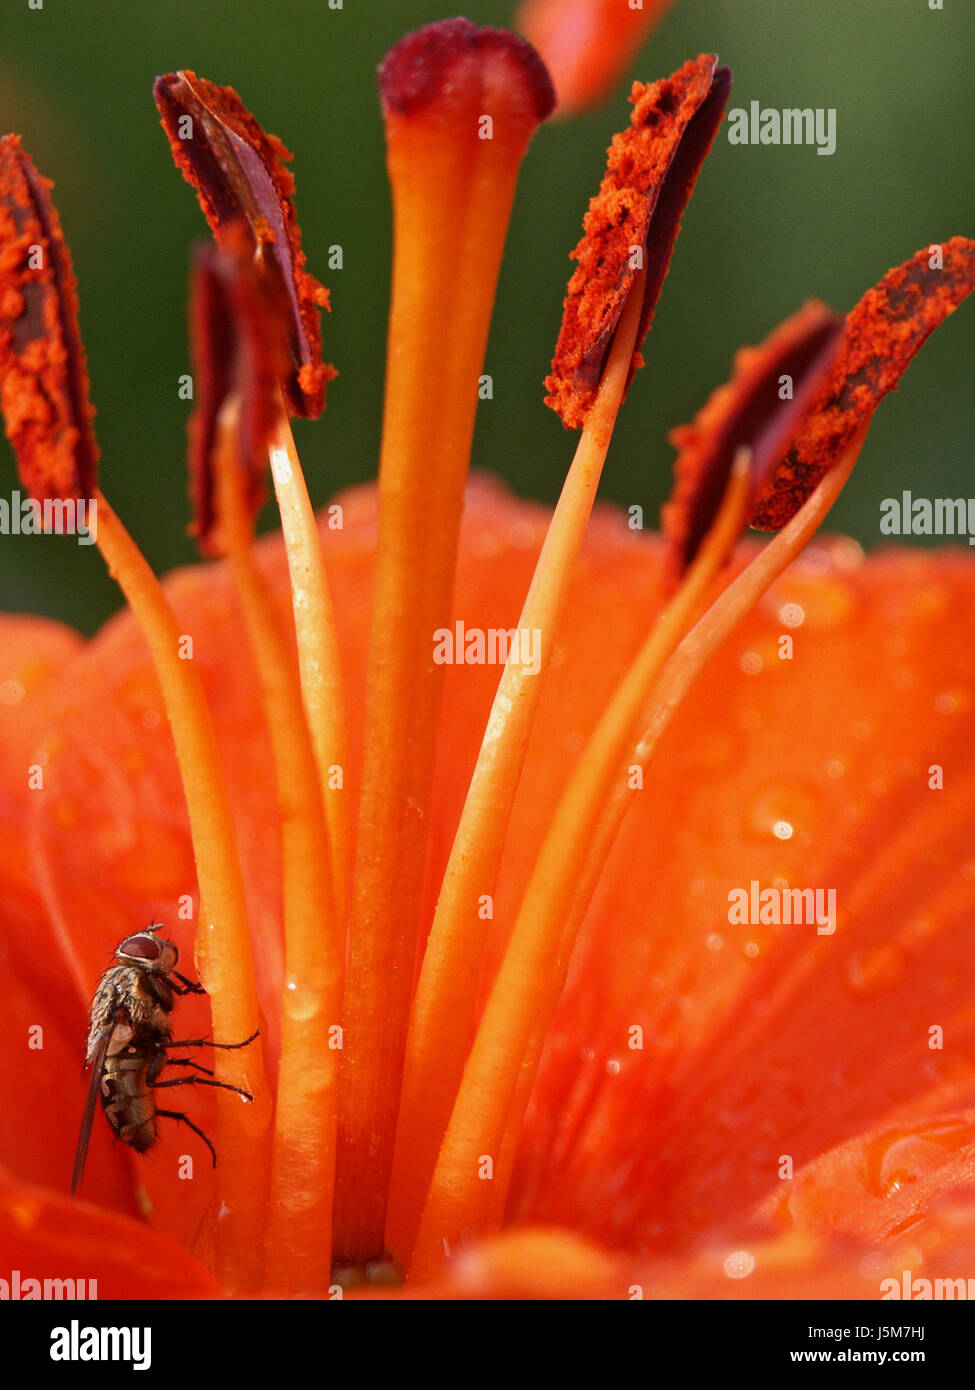 orange drink drinking bibs animal insect flower plant bloom blossom flourish Stock Photo